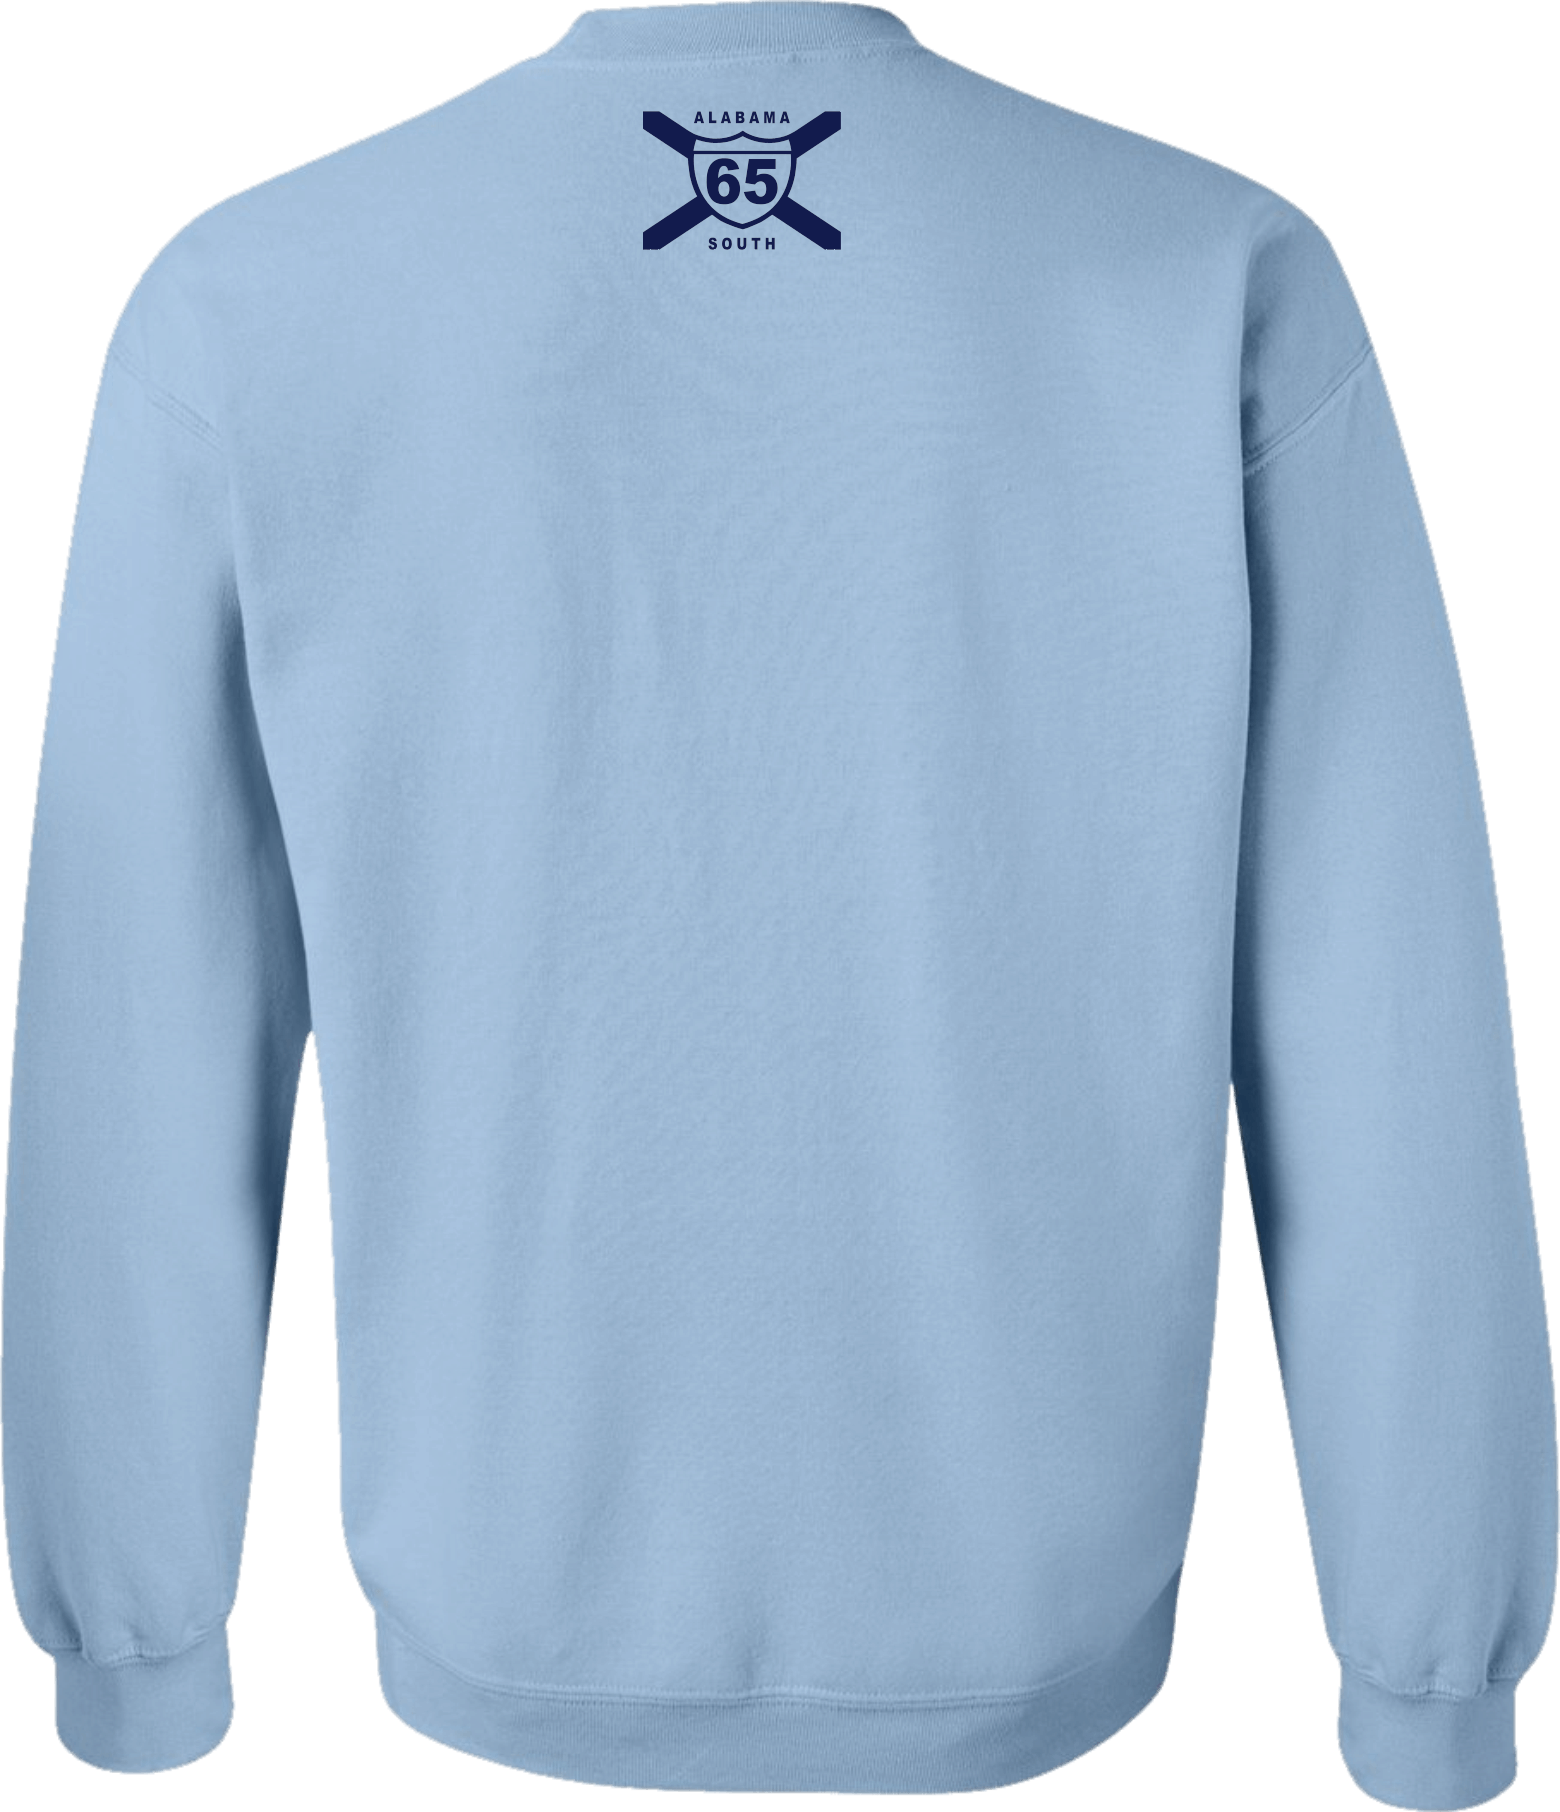 Sky Blue Gulf Logo Sweatshirt - 65 South